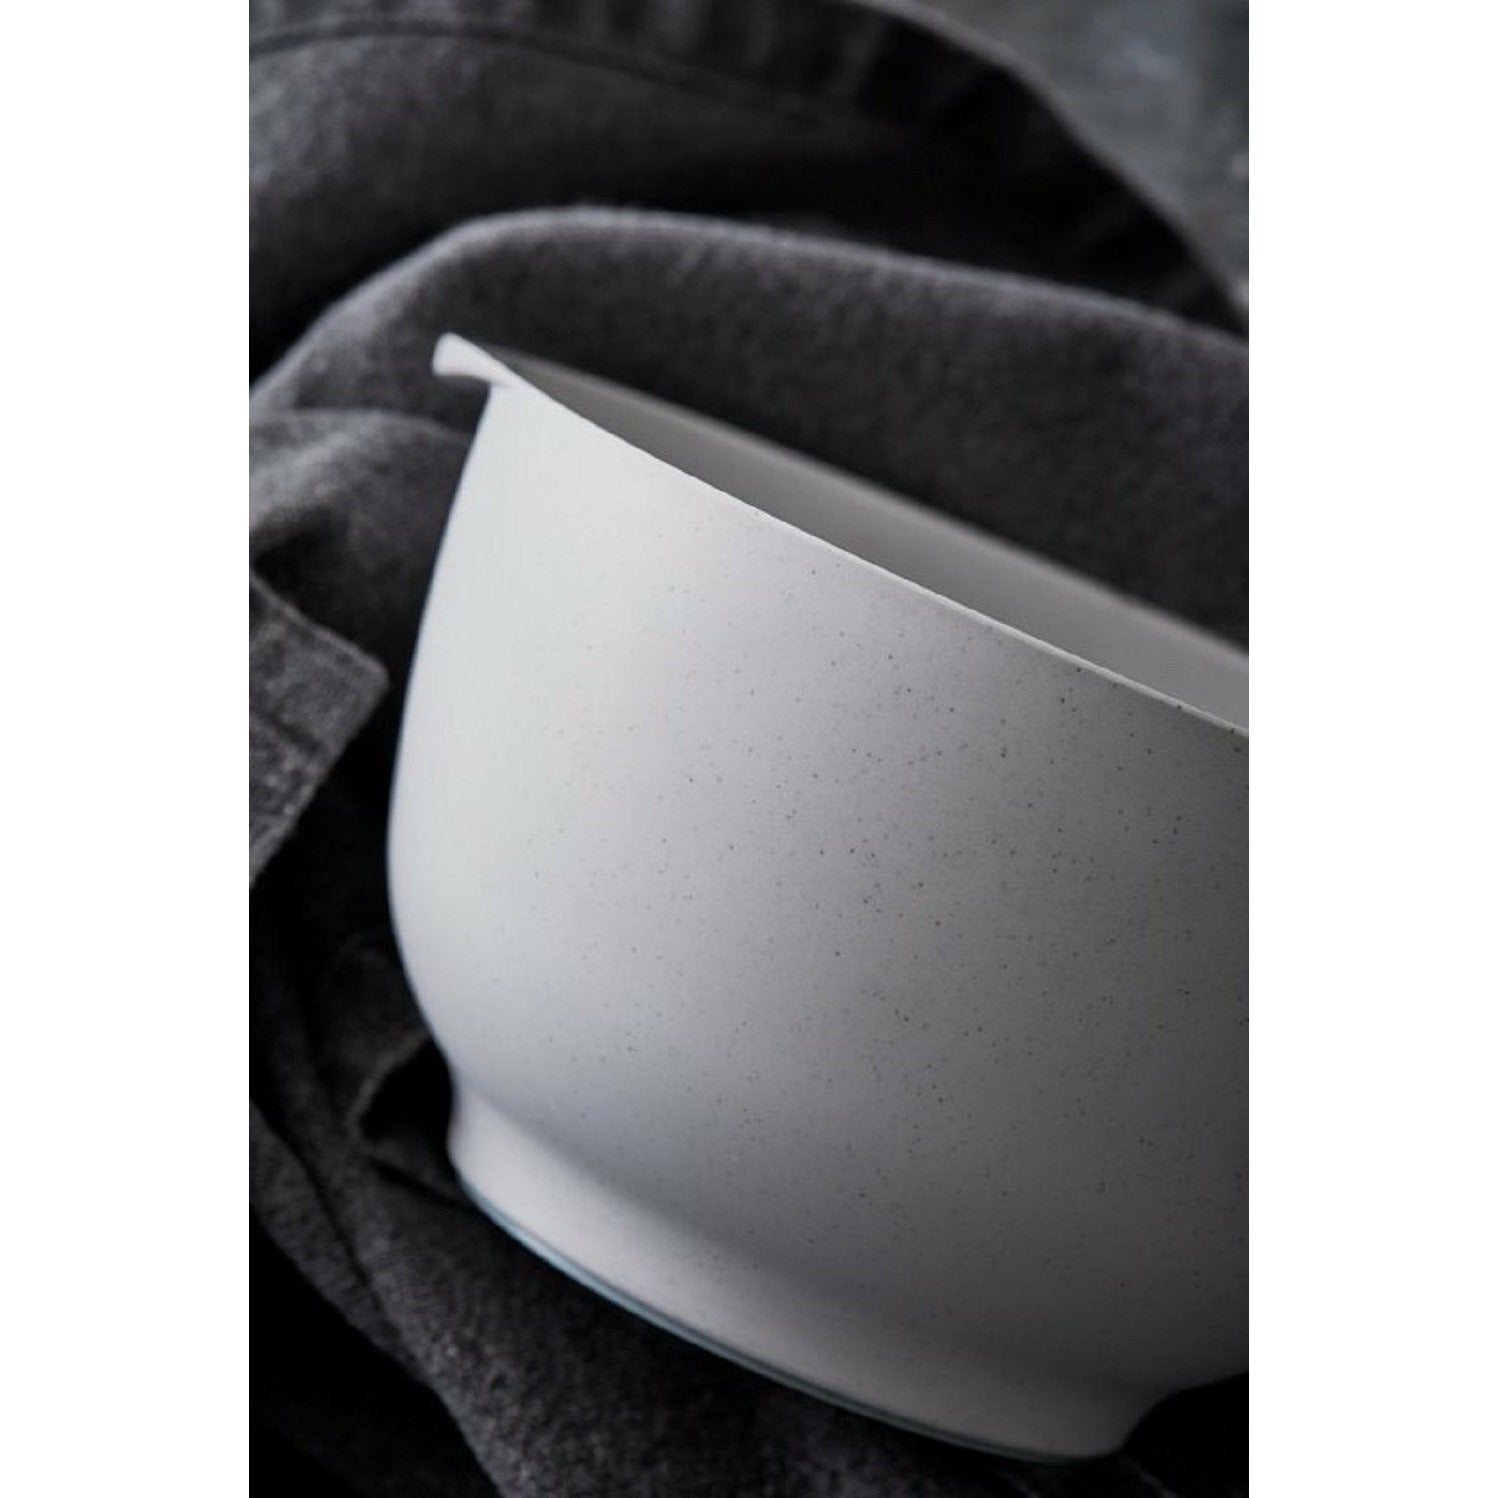 Rosti Margrethe Mixing Bowl Set Grey, 6 peças